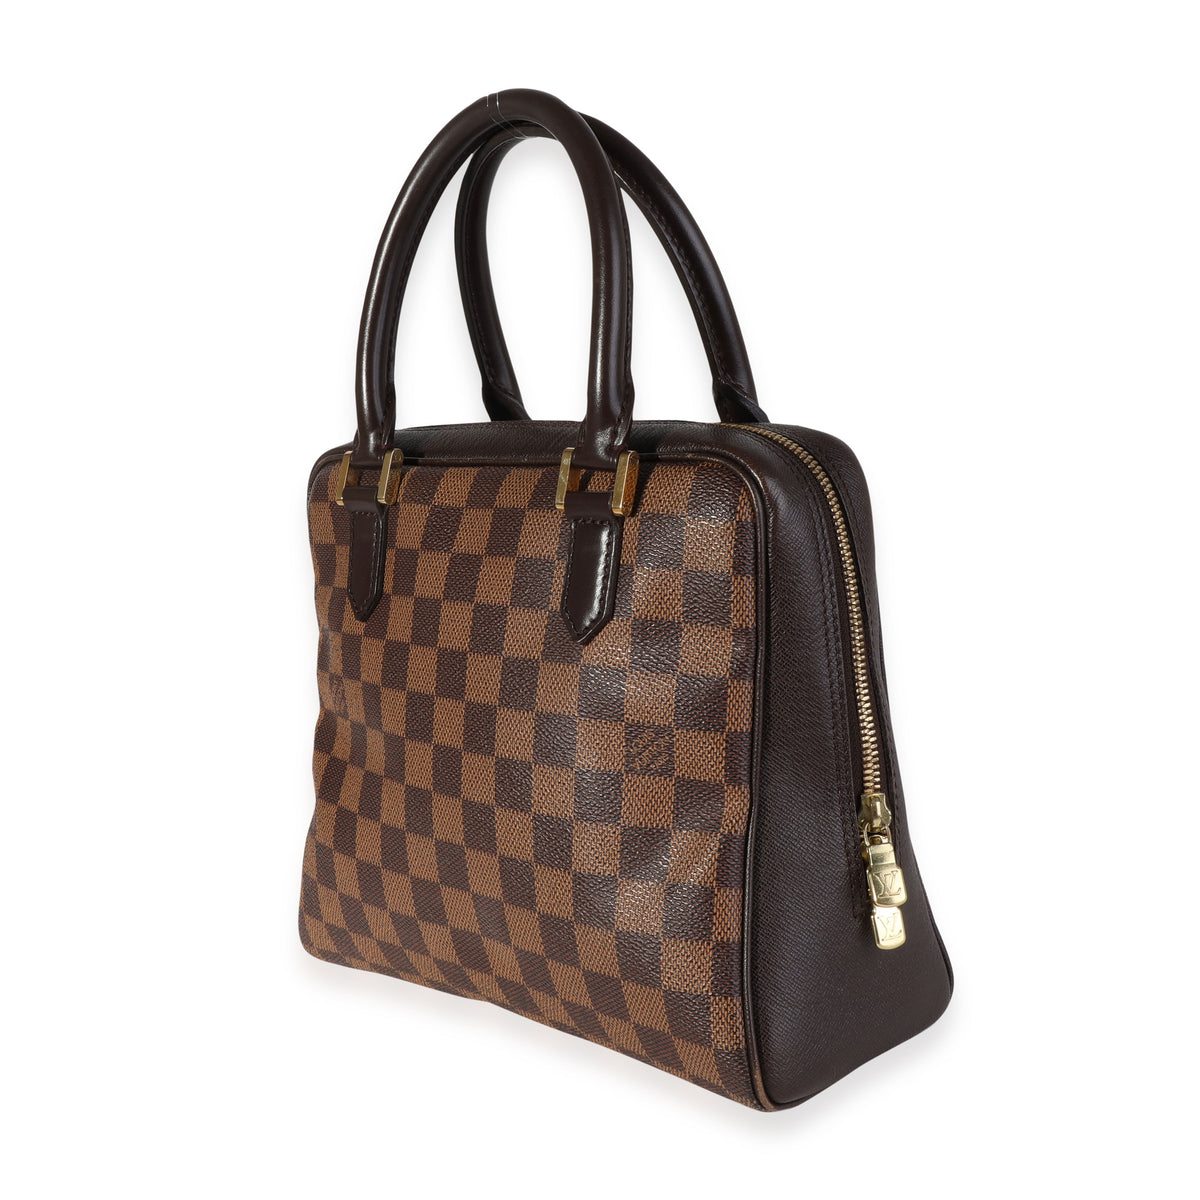 Shop for Louis Vuitton Damier Ebene Canvas Leather Brera Bag